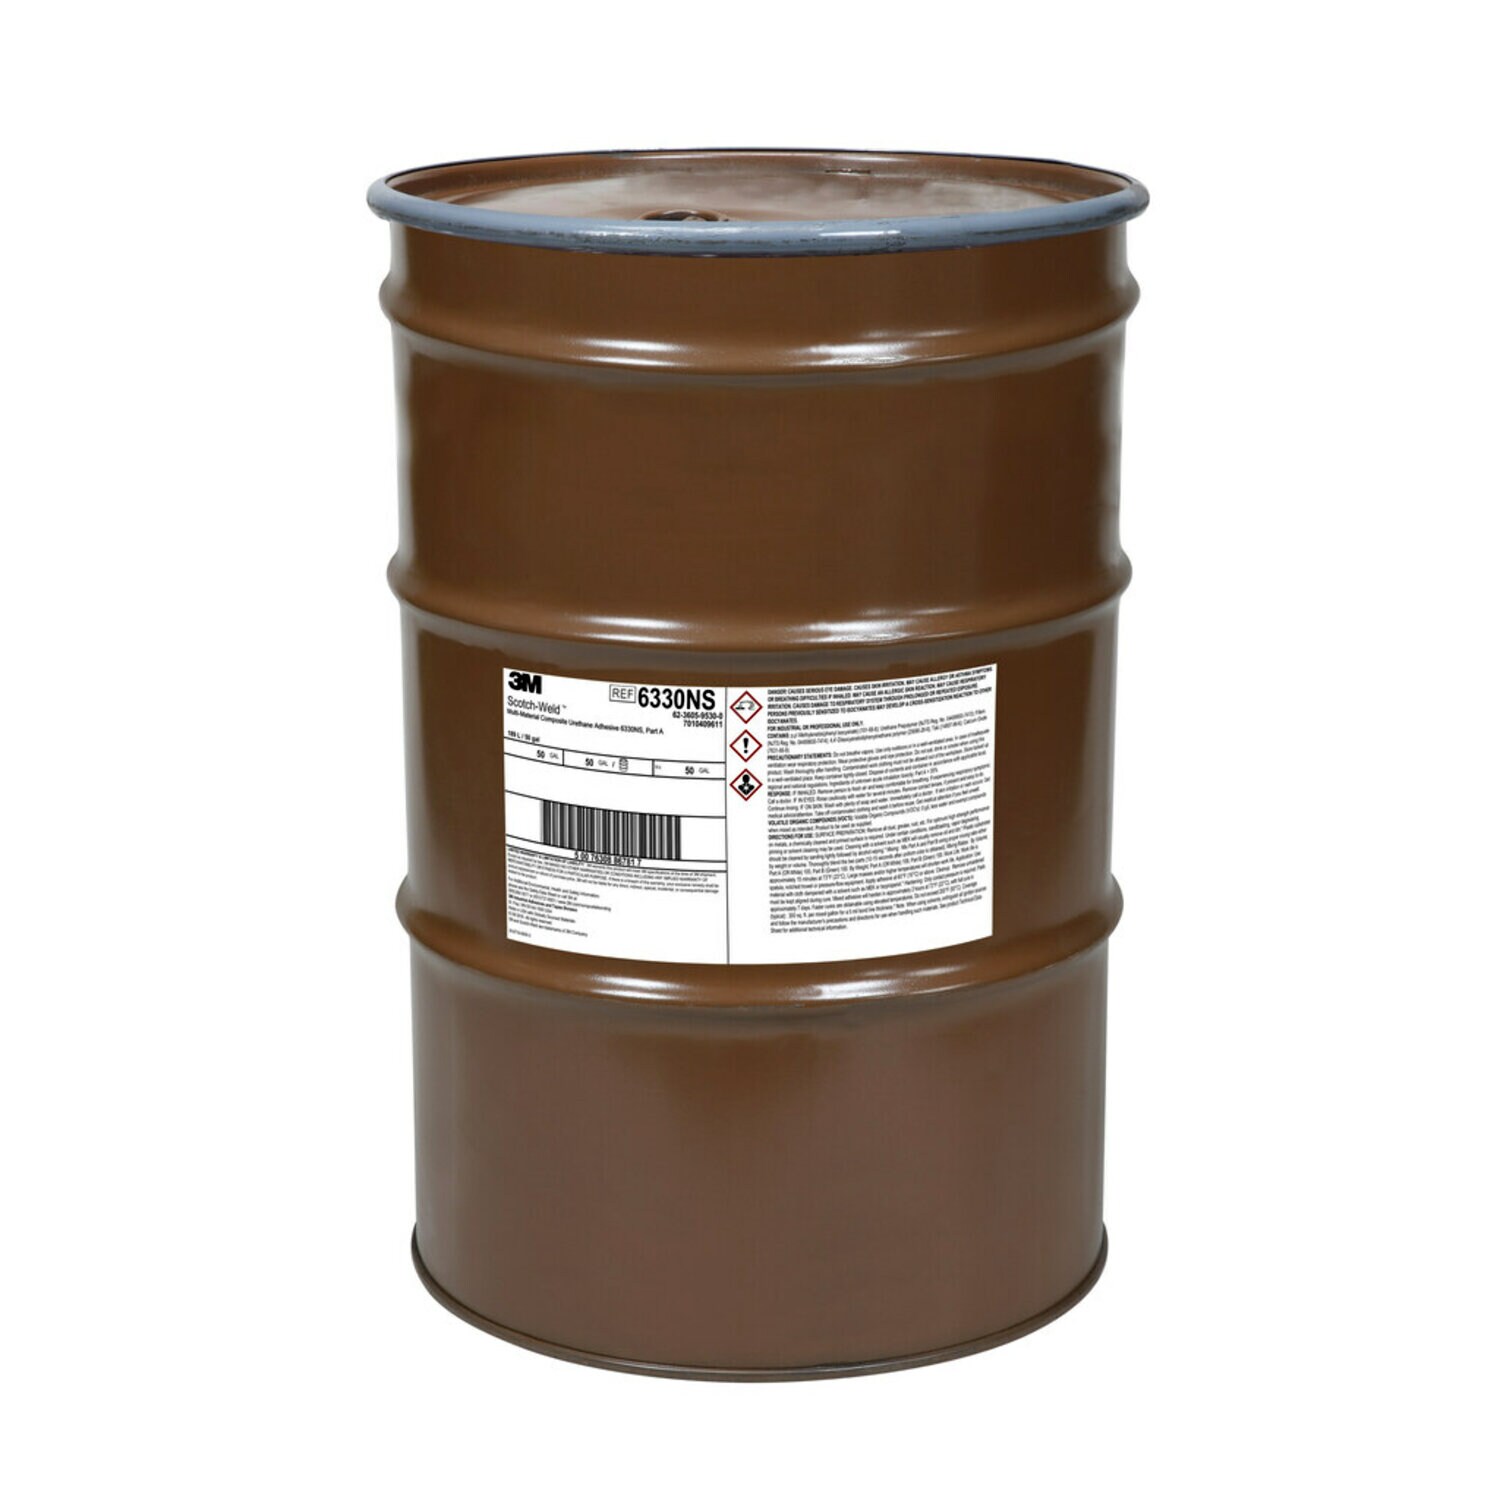 7010409611 - 3M Scotch-Weld Multi-Material Composite Urethane Adhesive 6330NS,
Green, Part A, 55 Gallon (50 Gallon Net), Drum